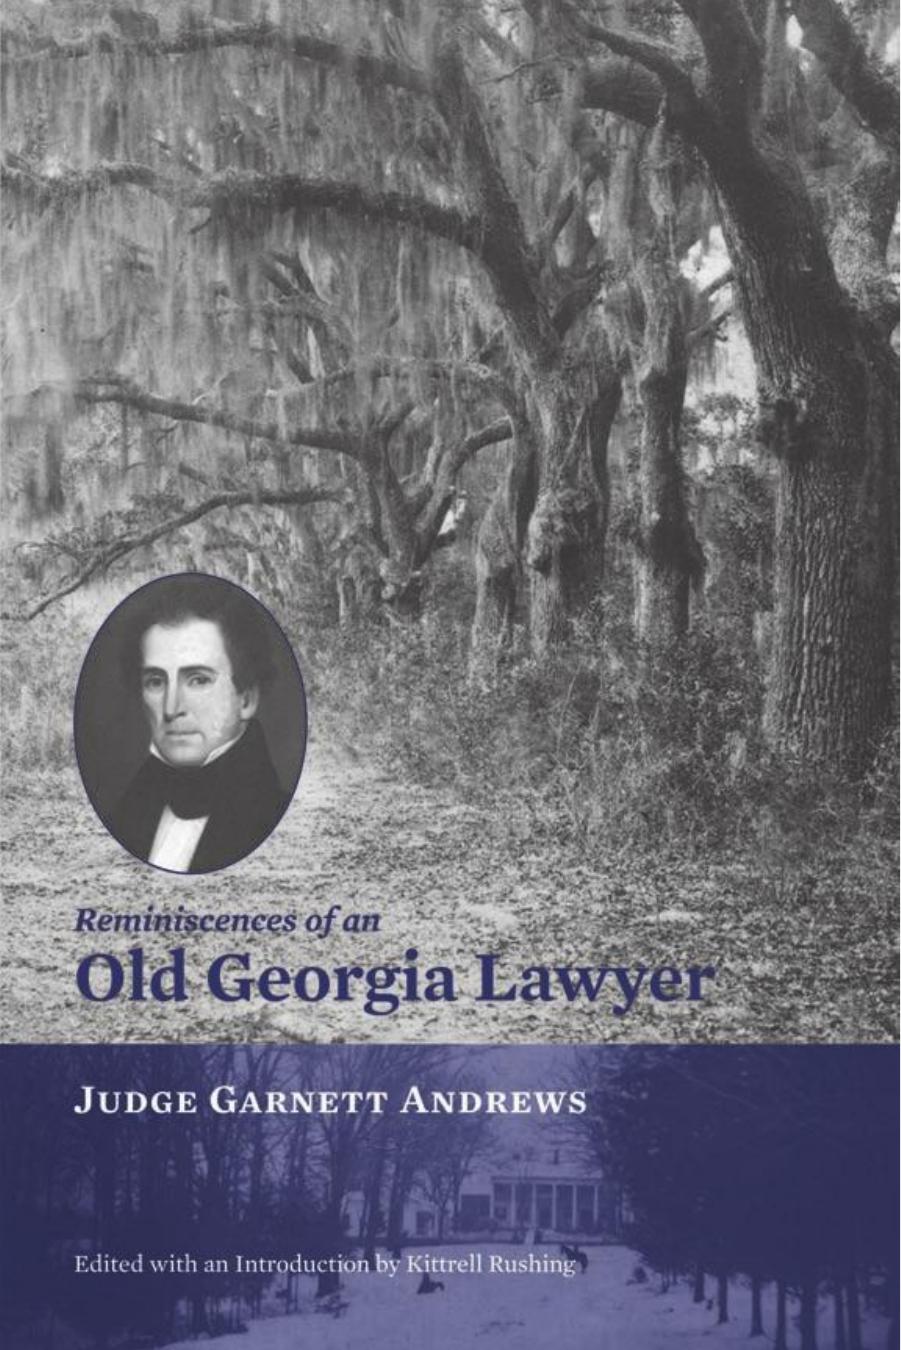 Reminiscences of an Old Georgia Lawyer : Judge Garnett Andrews by S. Kittrell Rushing